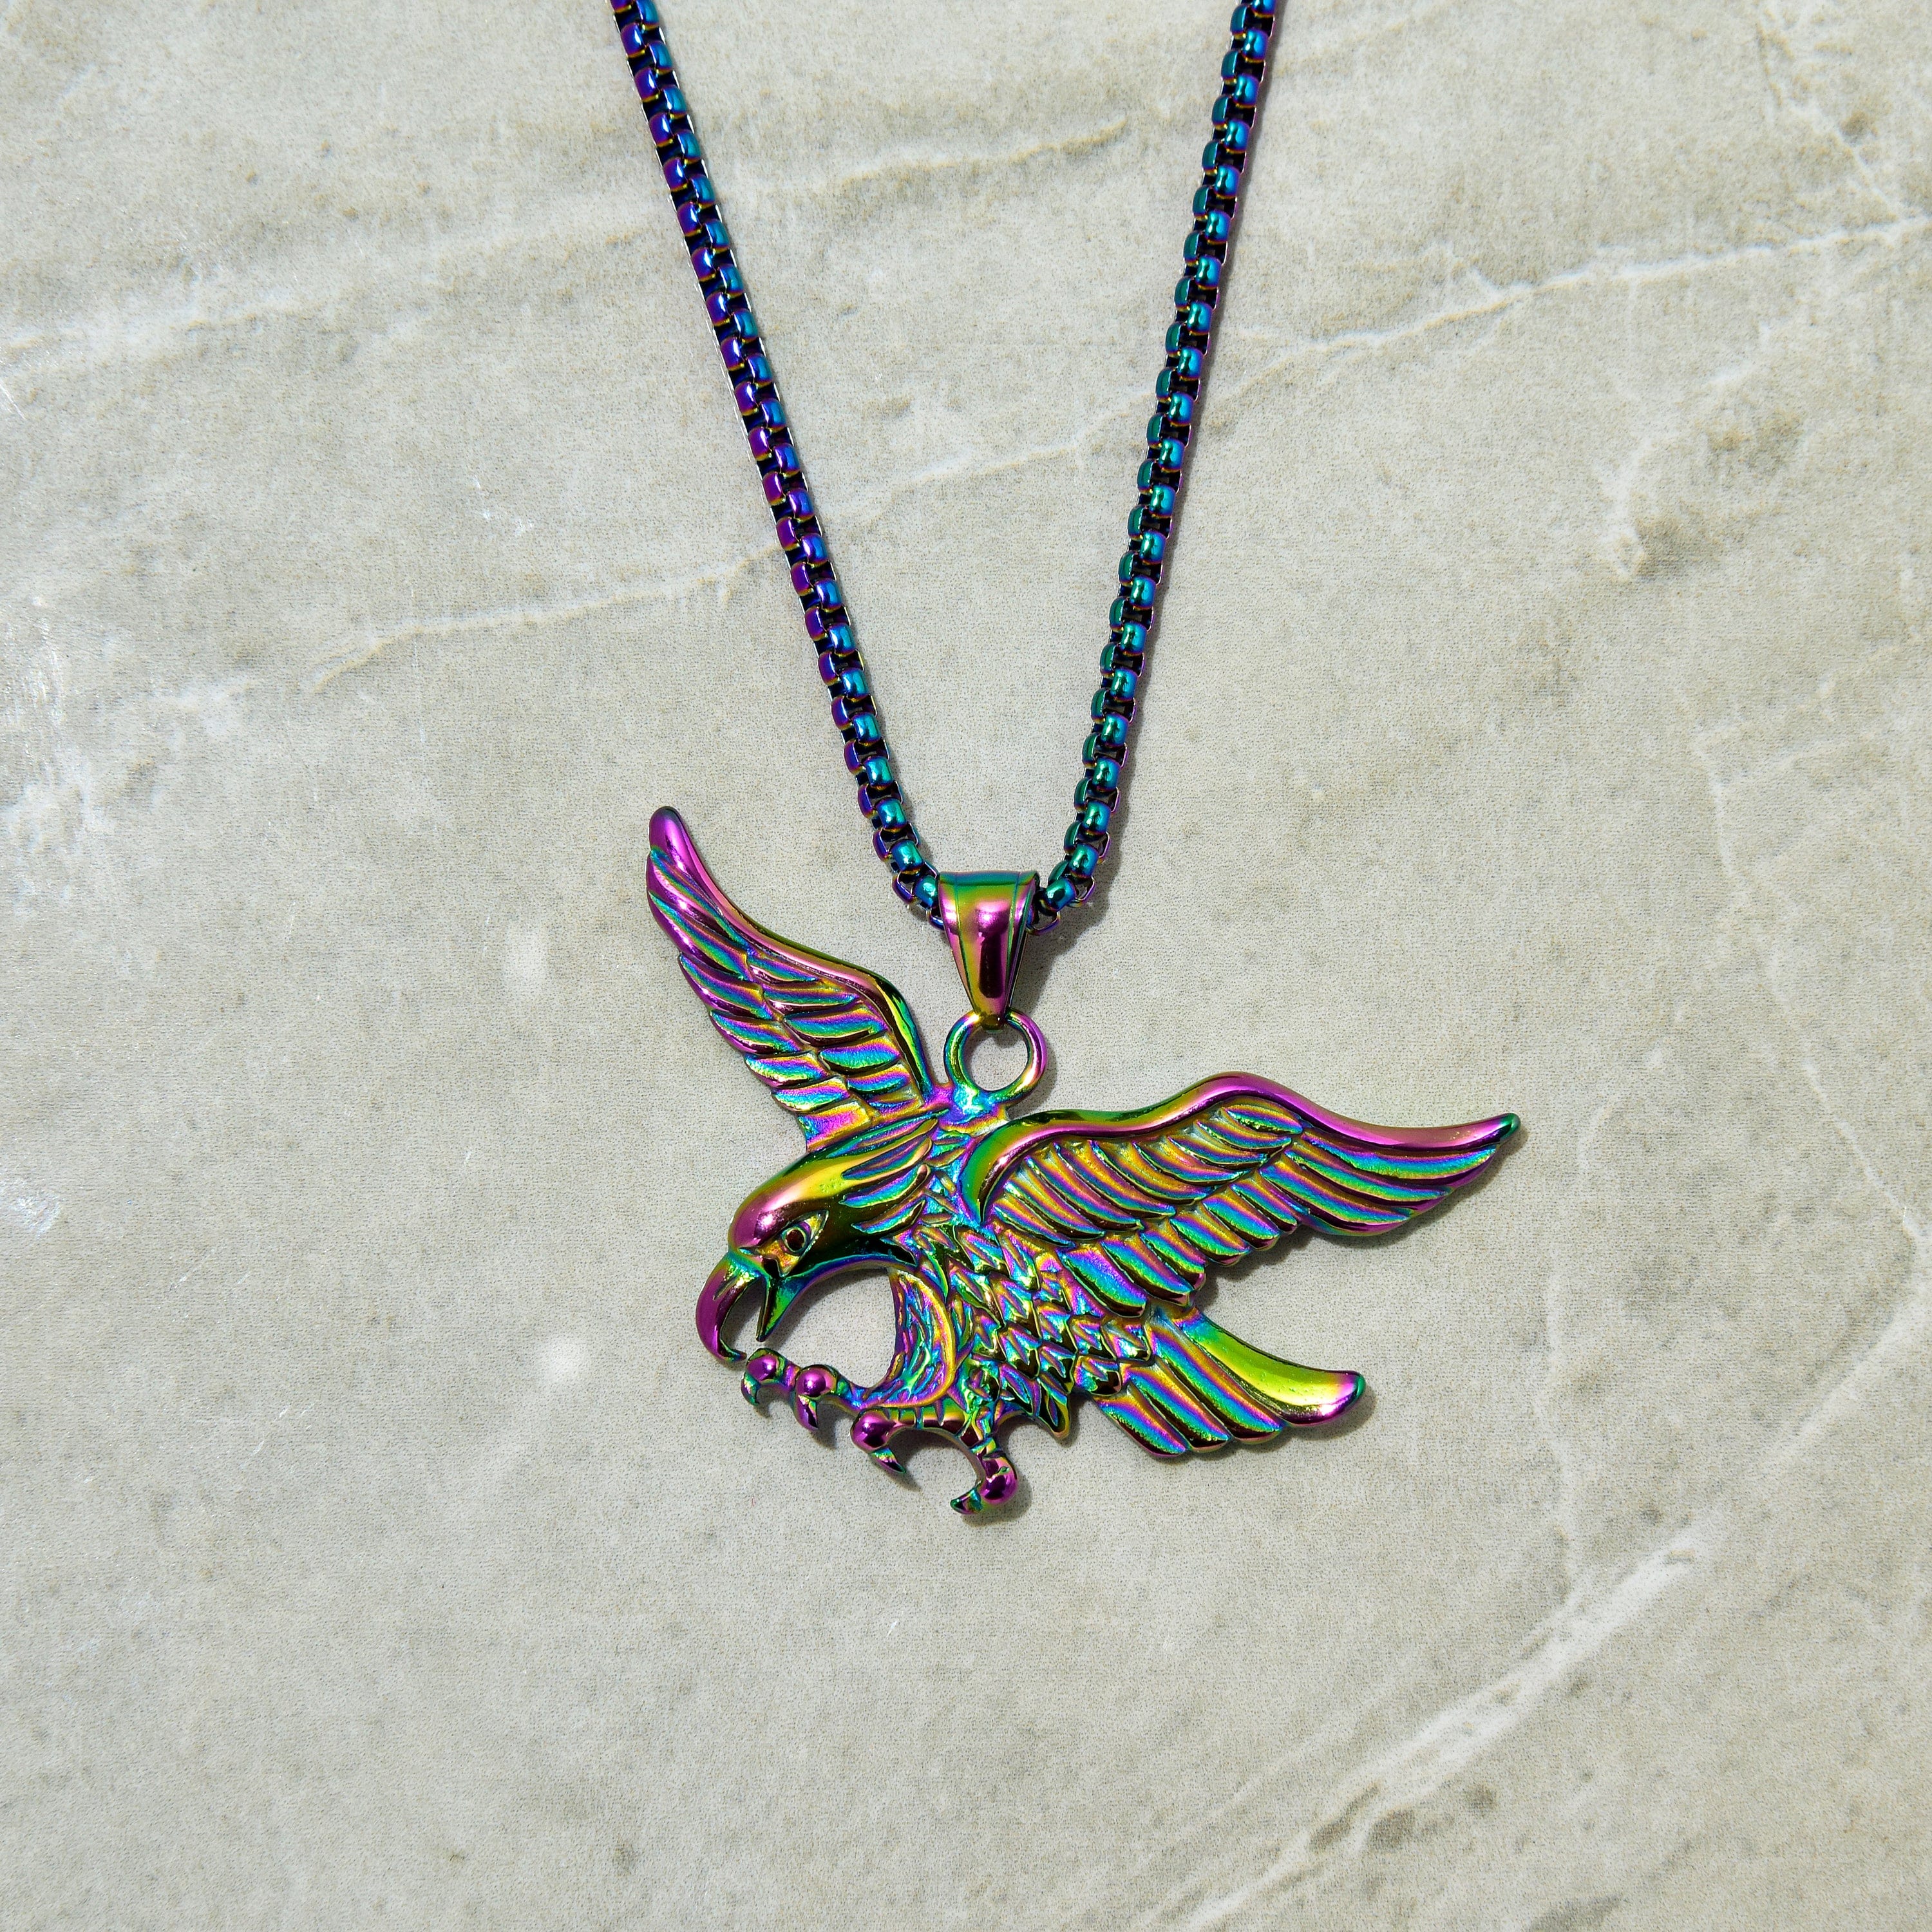 Kalifano Steel Hearts Jewelry Aurora Borealis Eagle Steel Hearts Necklace SHN508-AB